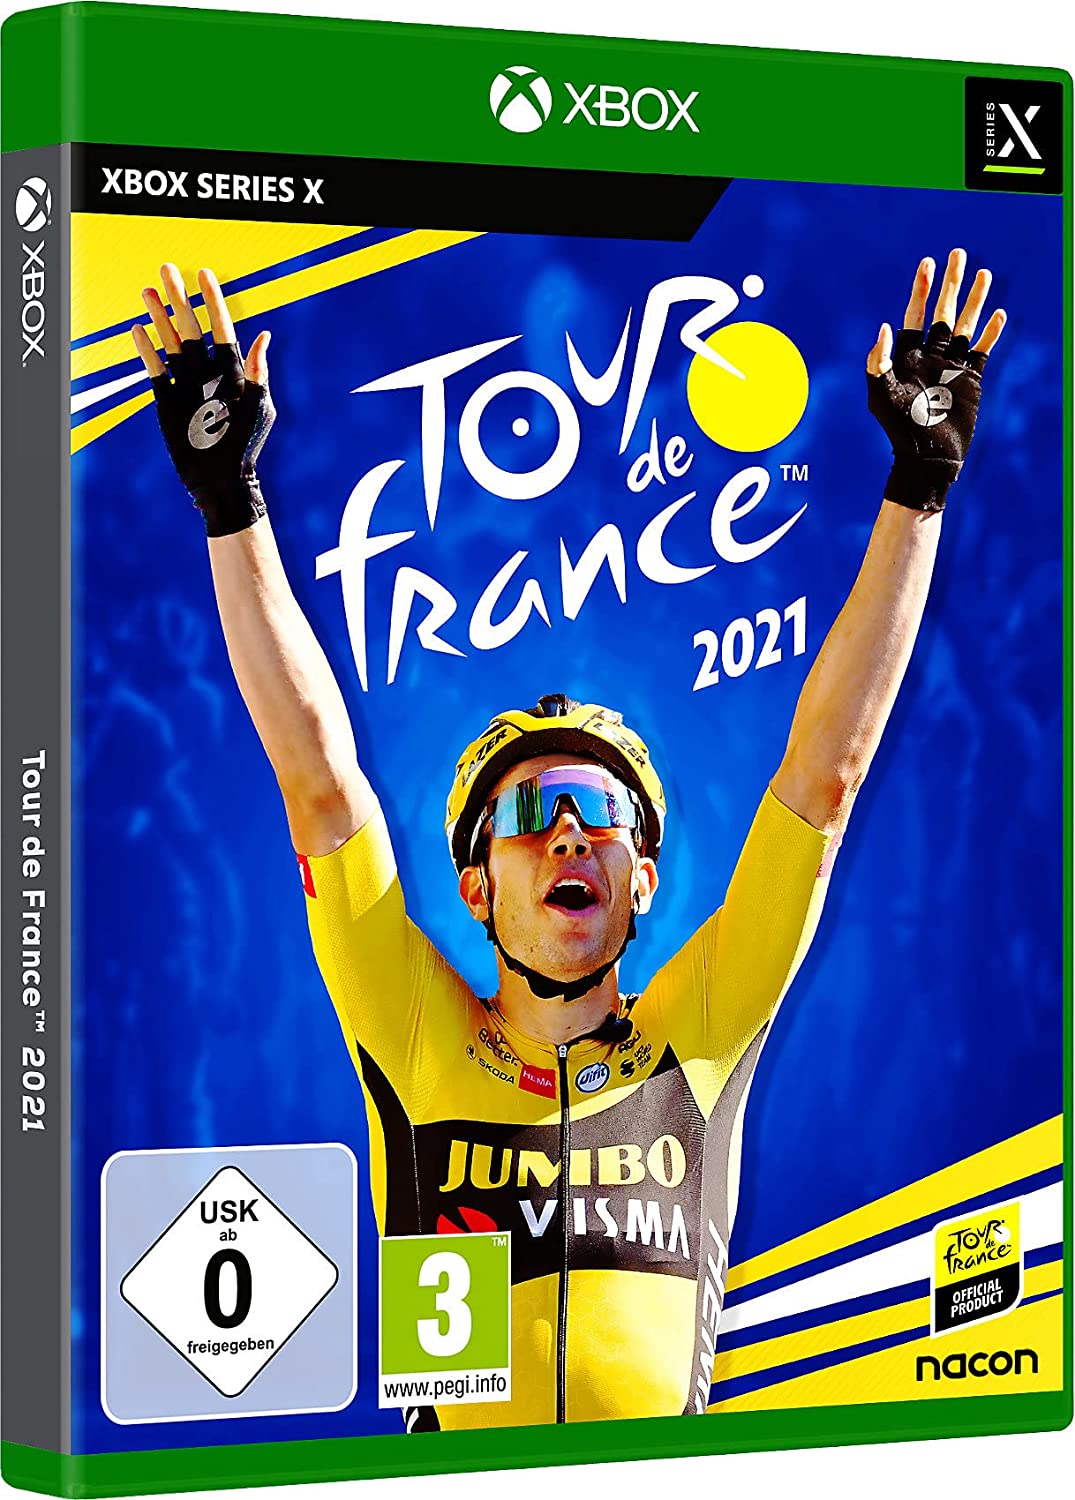 Tour de France 2021 Digital Download Key (Xbox Series X): United Kingdom